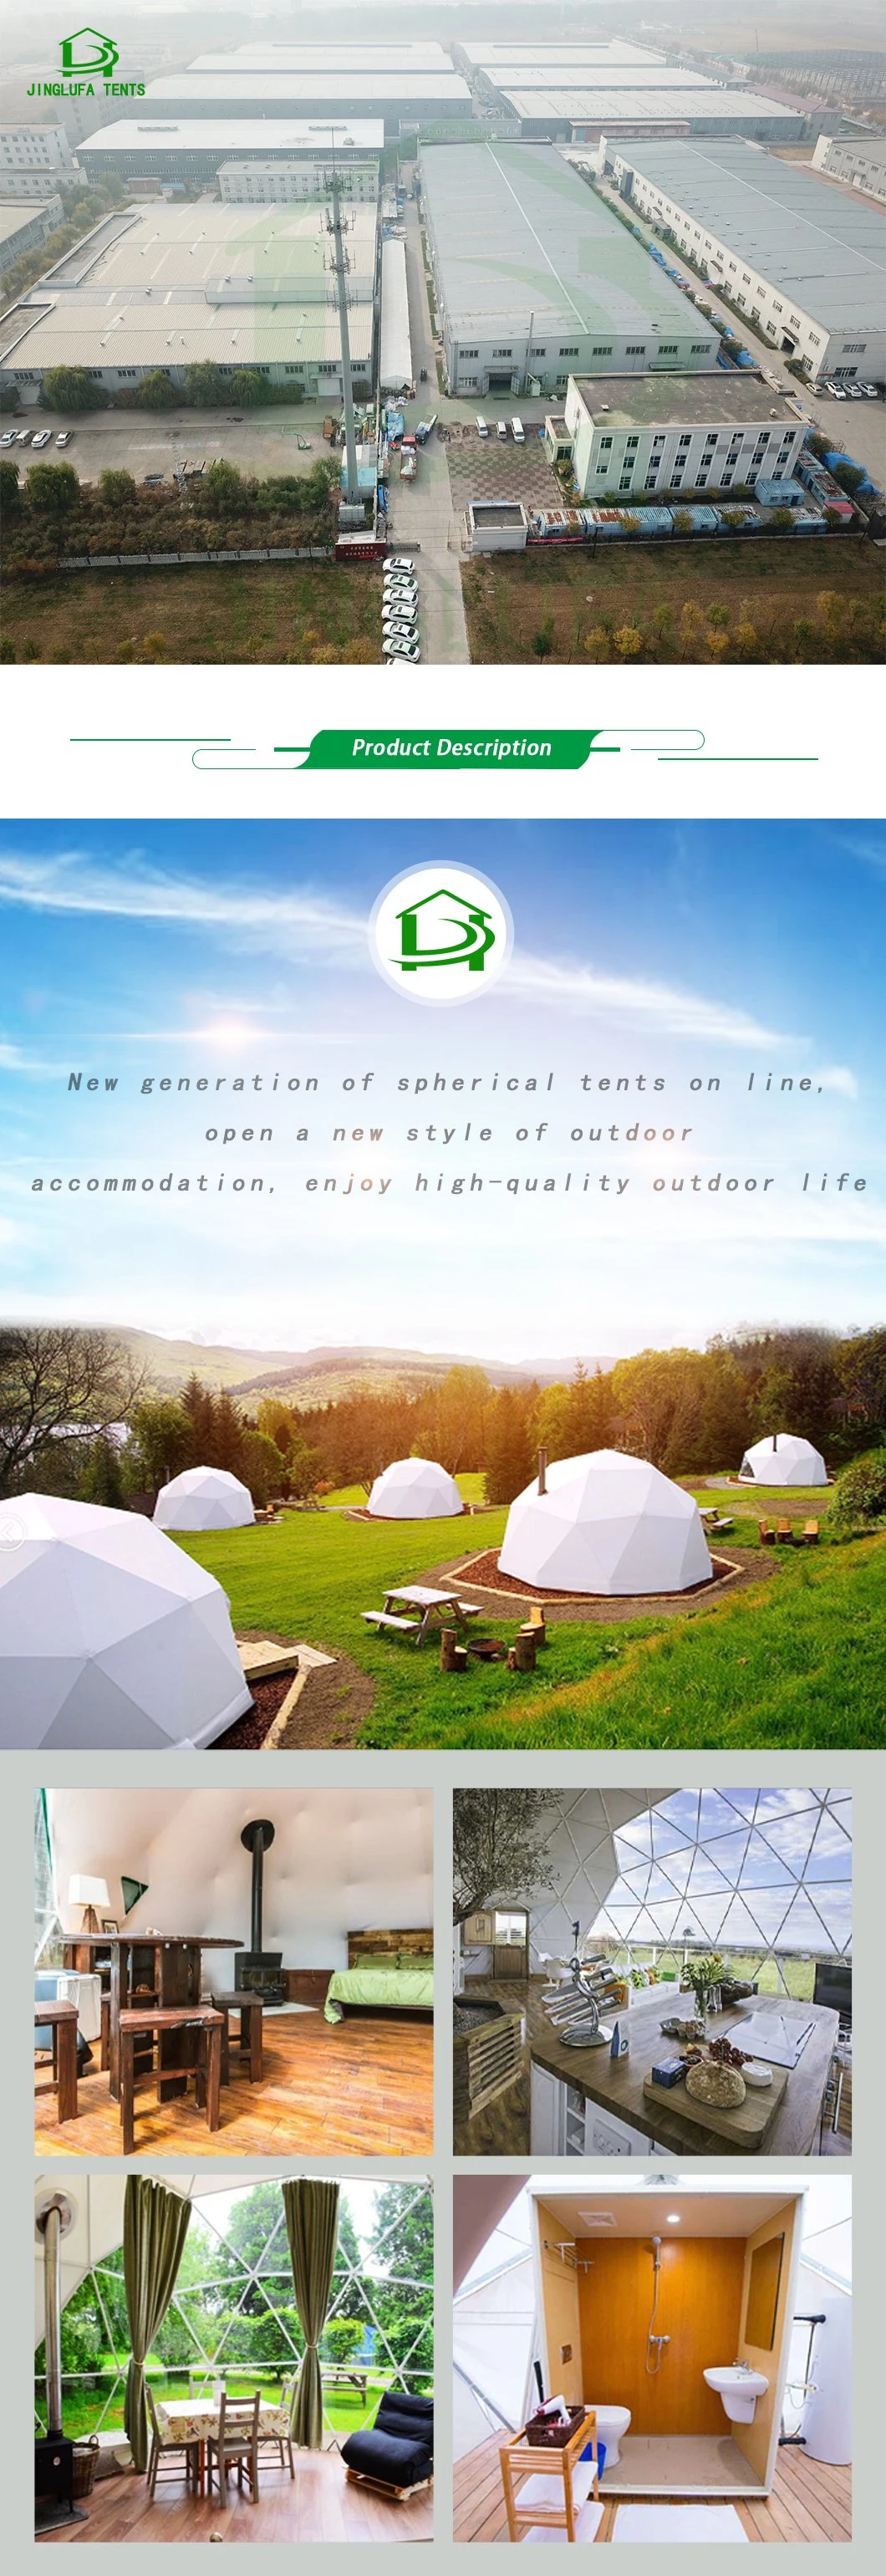 Luxury PVC Waterproof Geodesic Dome Glamping Tent